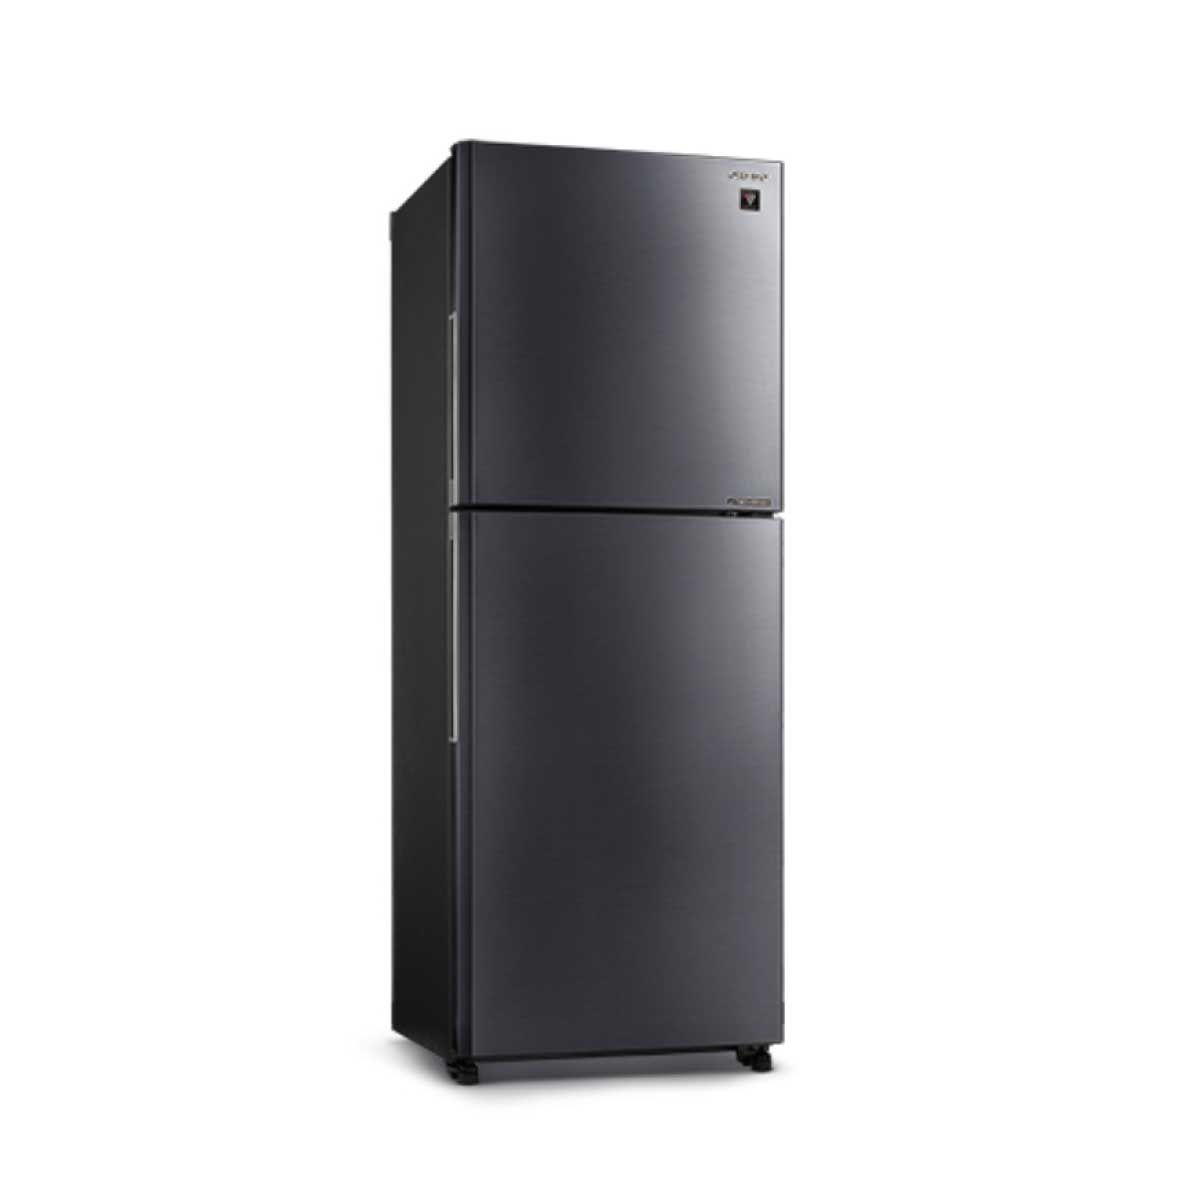 SHARP ตู้เย็น 2 ประตู 11.7Q Inverter  สีเงินเข้ม รุ่น SJ-XP330TP-DK